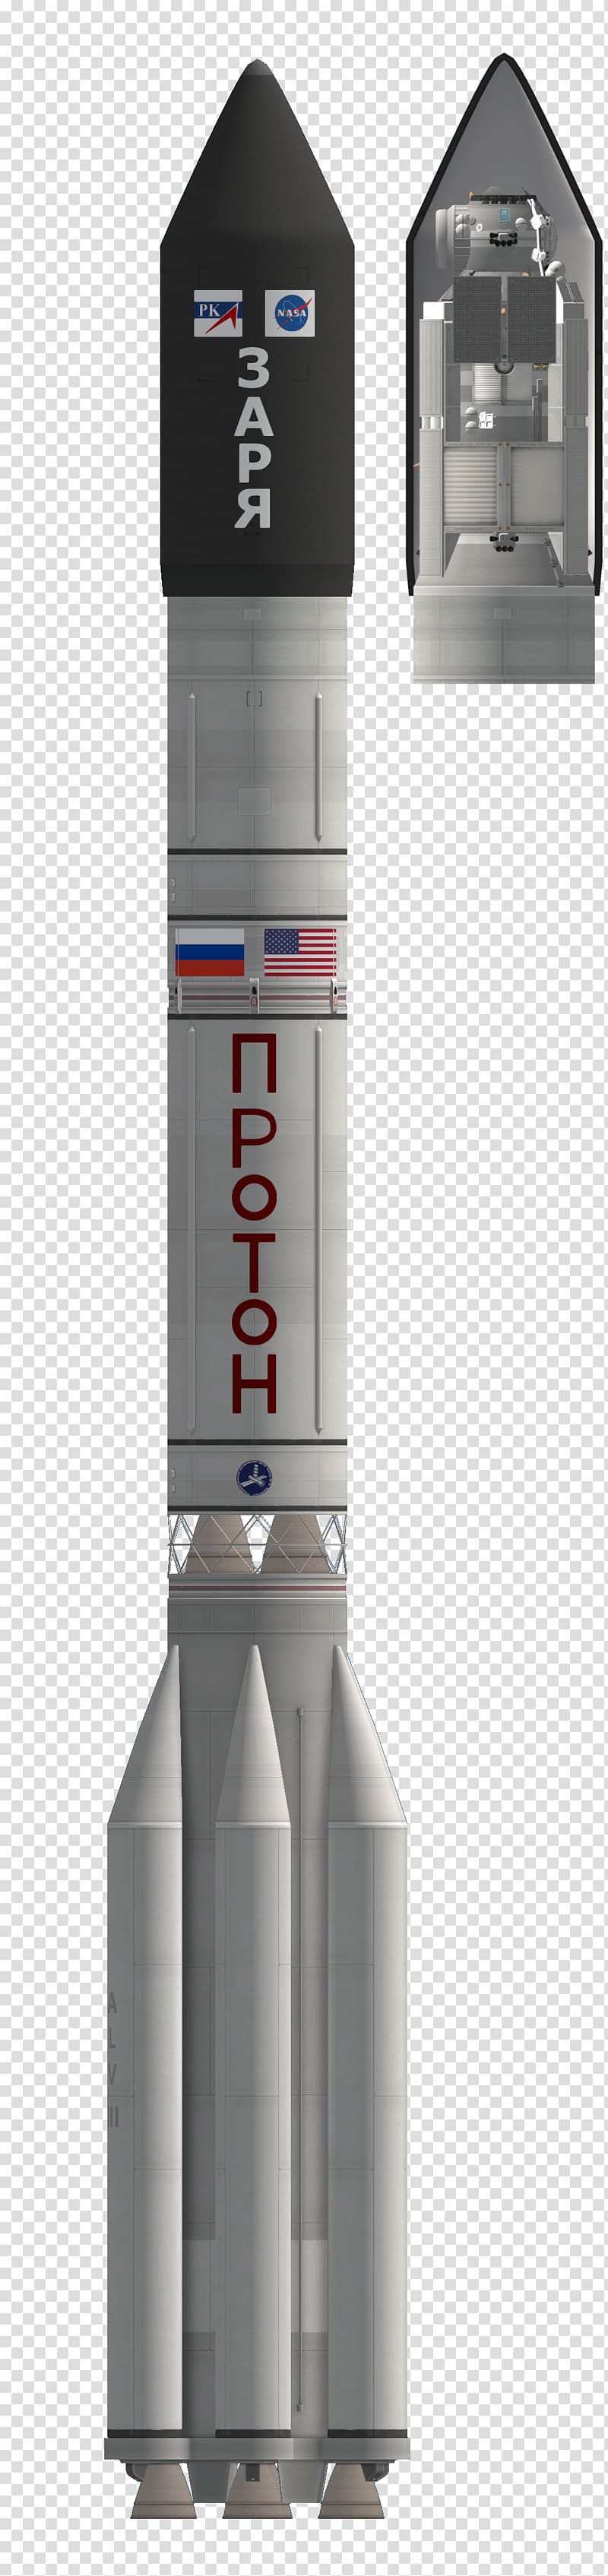 Kerbal Space Program International Space Station Spacecraft Zarya Rocket, Canadarm transparent background PNG clipart